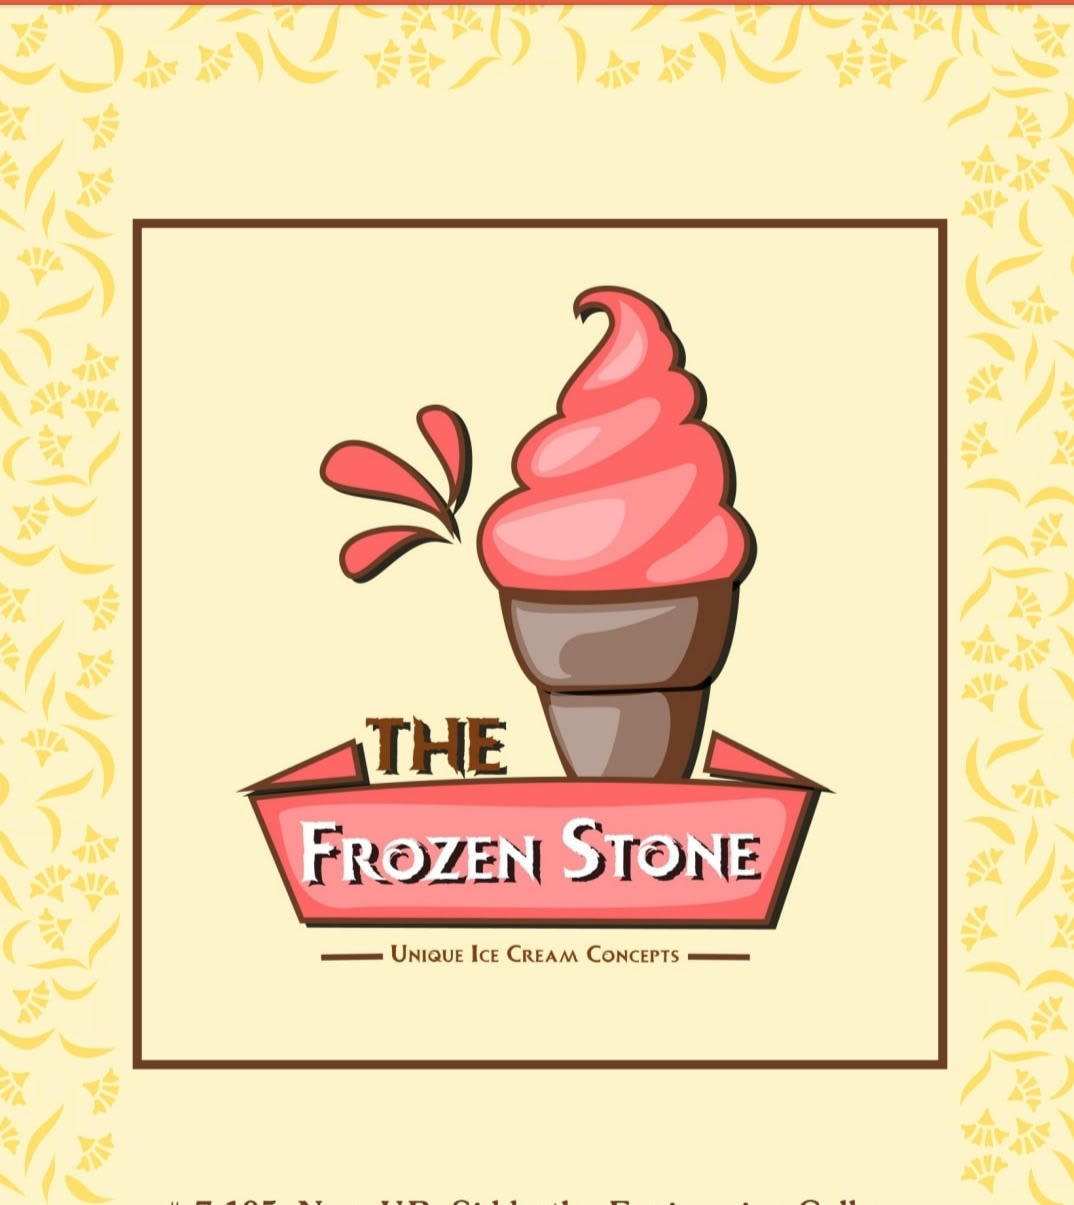 THE Frozen Stone